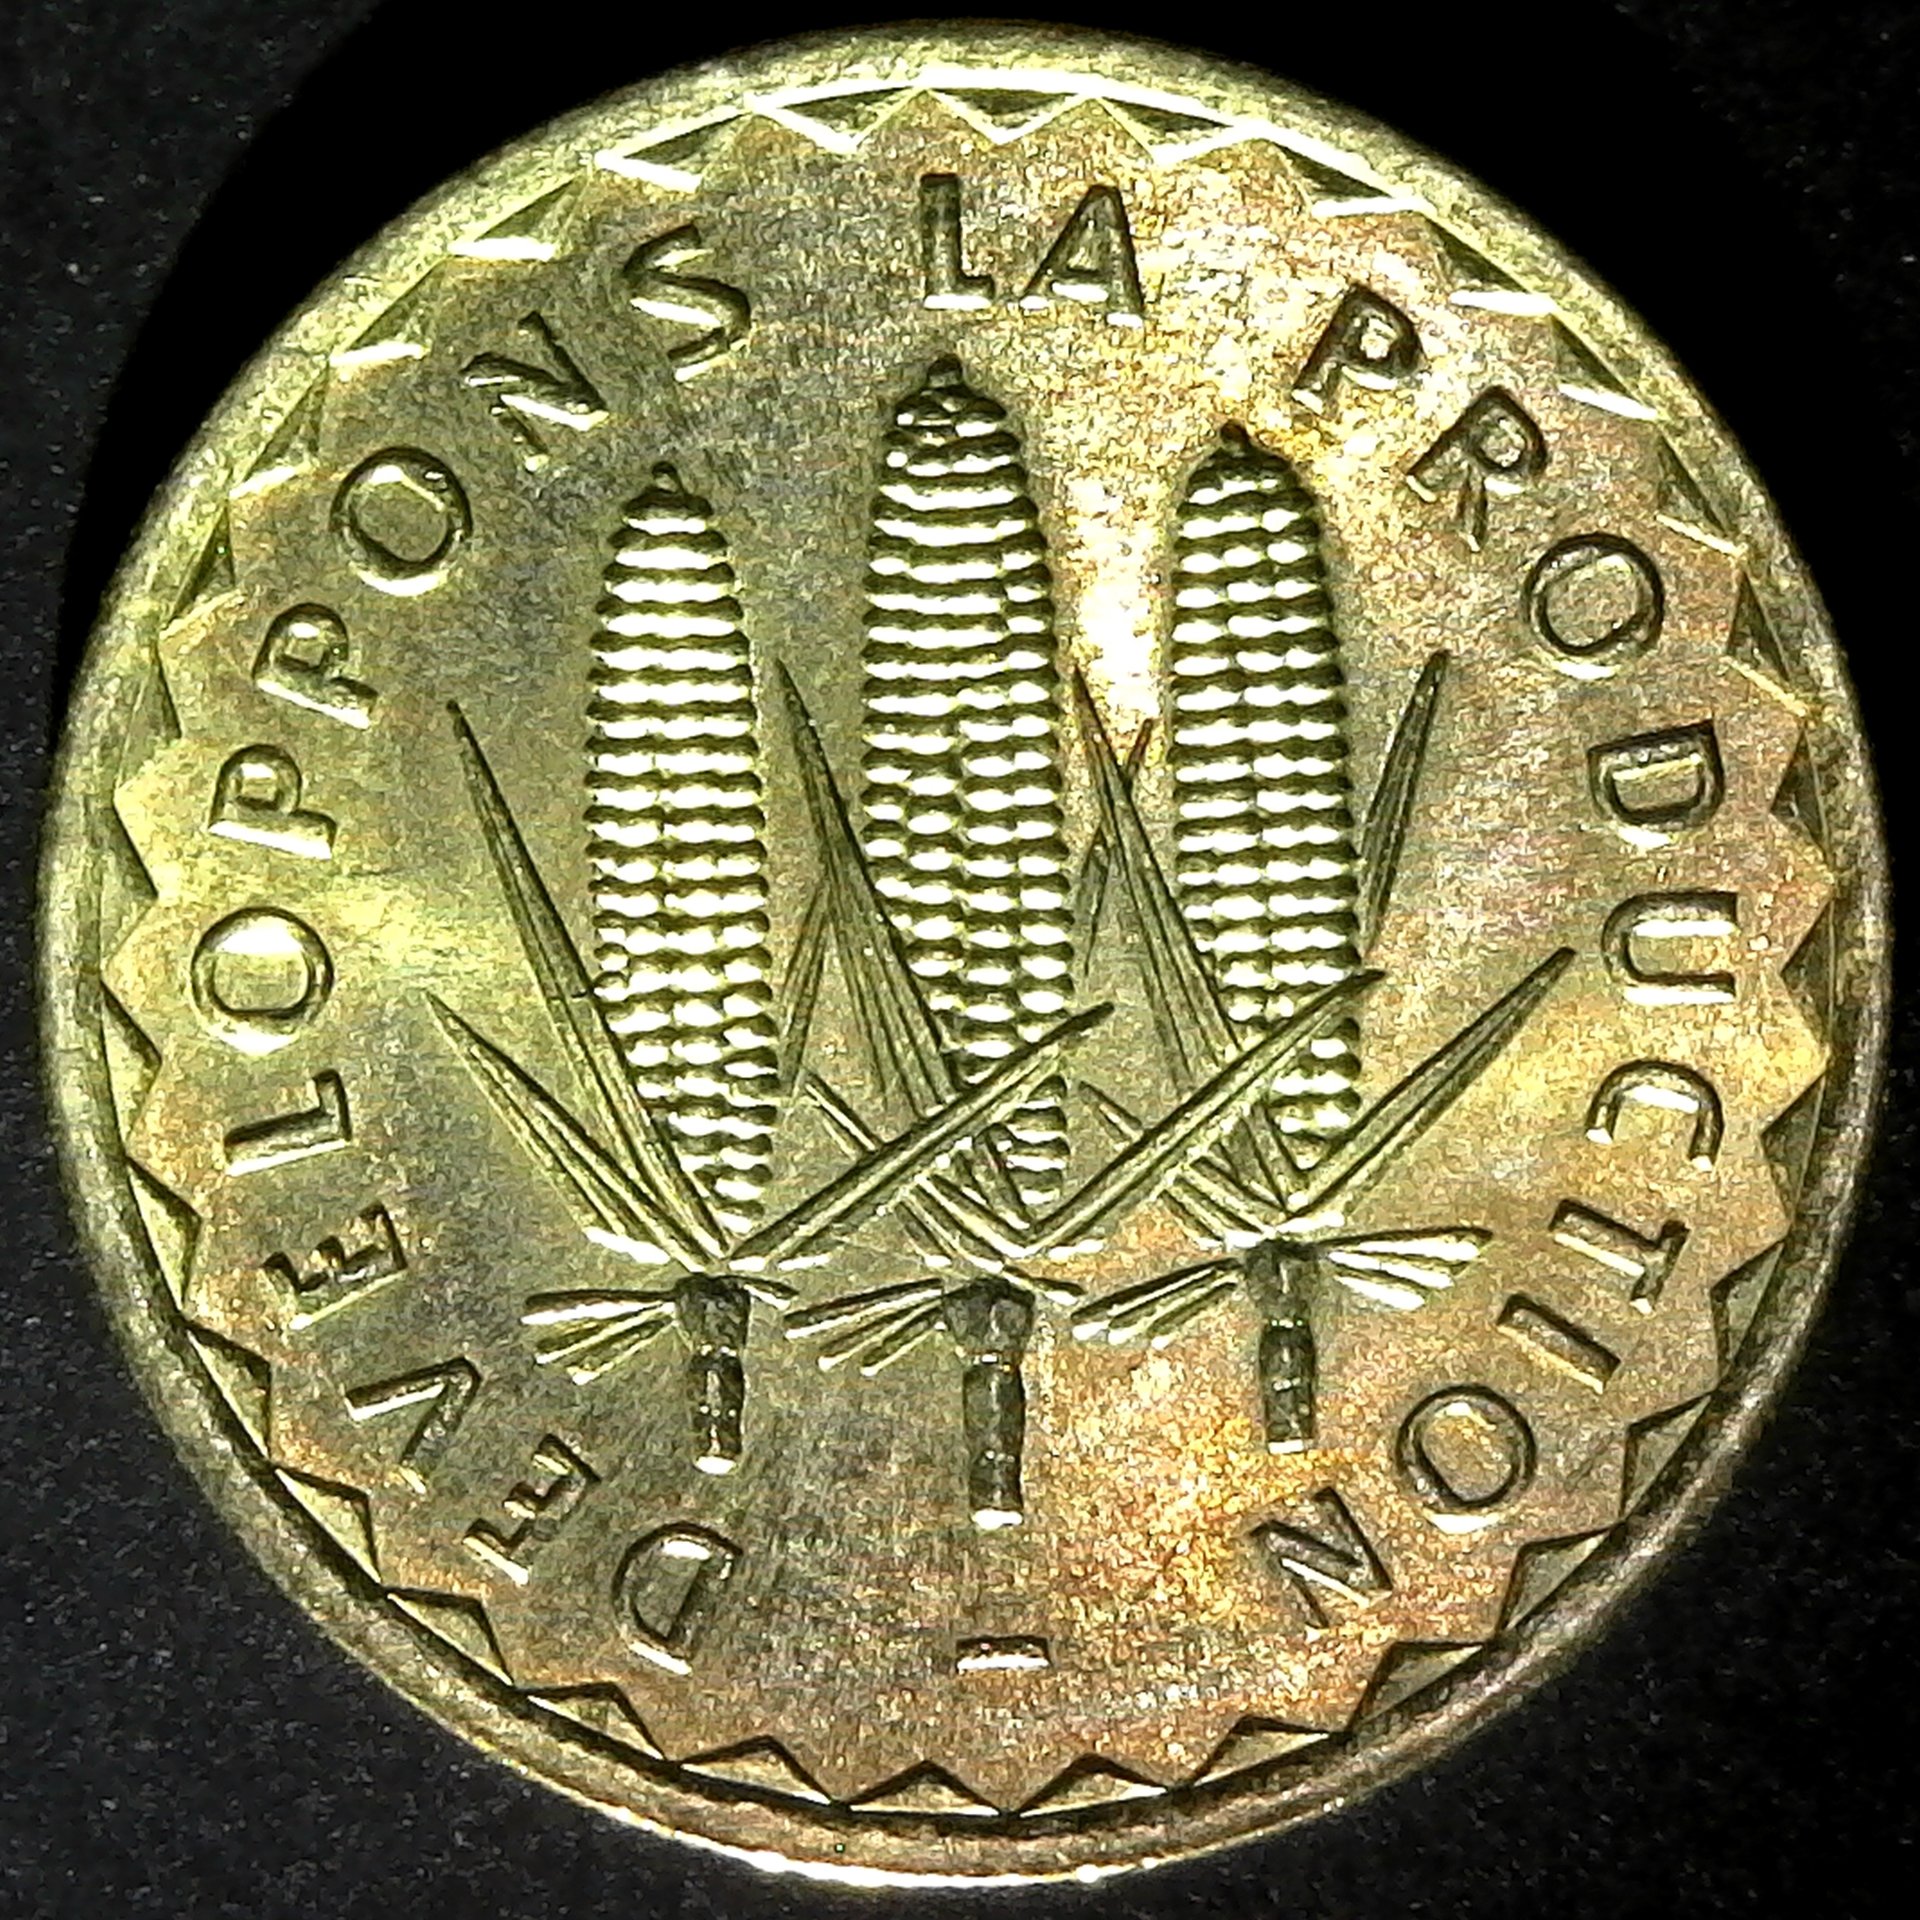 Mali 100 Francs 1975 rev.jpg